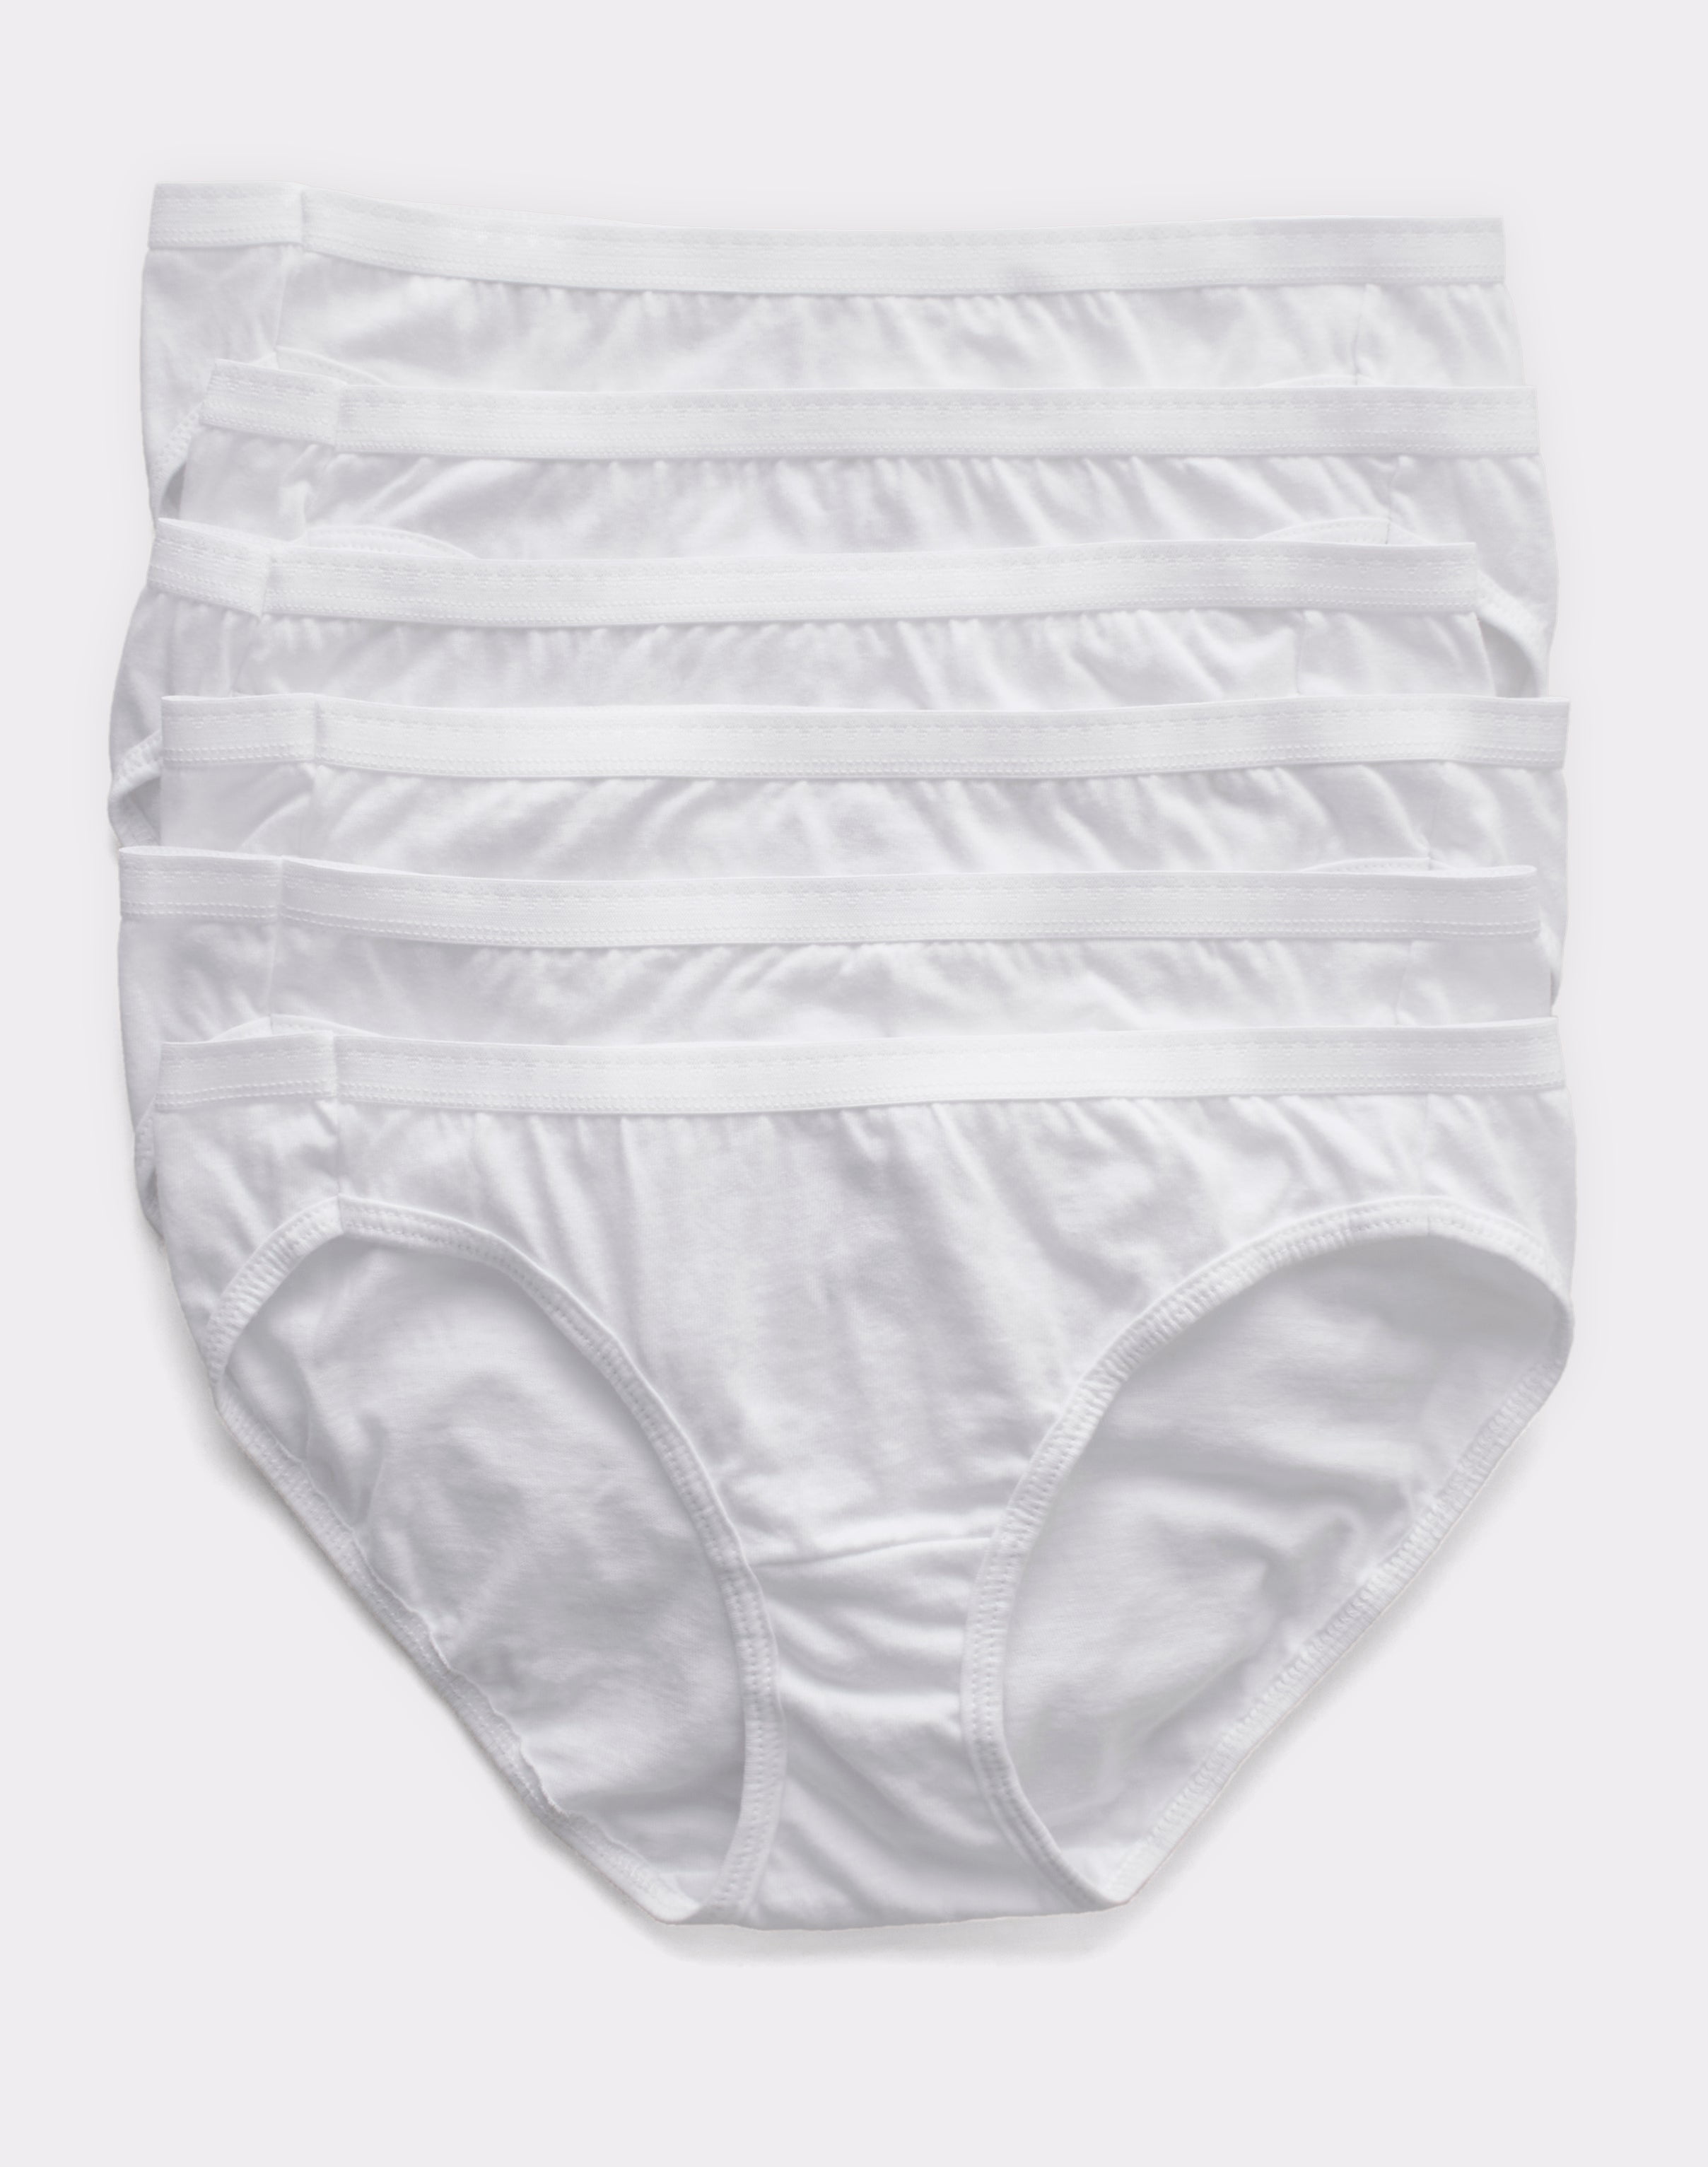 Hanes Ultimate Women's Breathable Cotton Bikini Underwear, 6-Pack  White/White/White/White/White/White 5